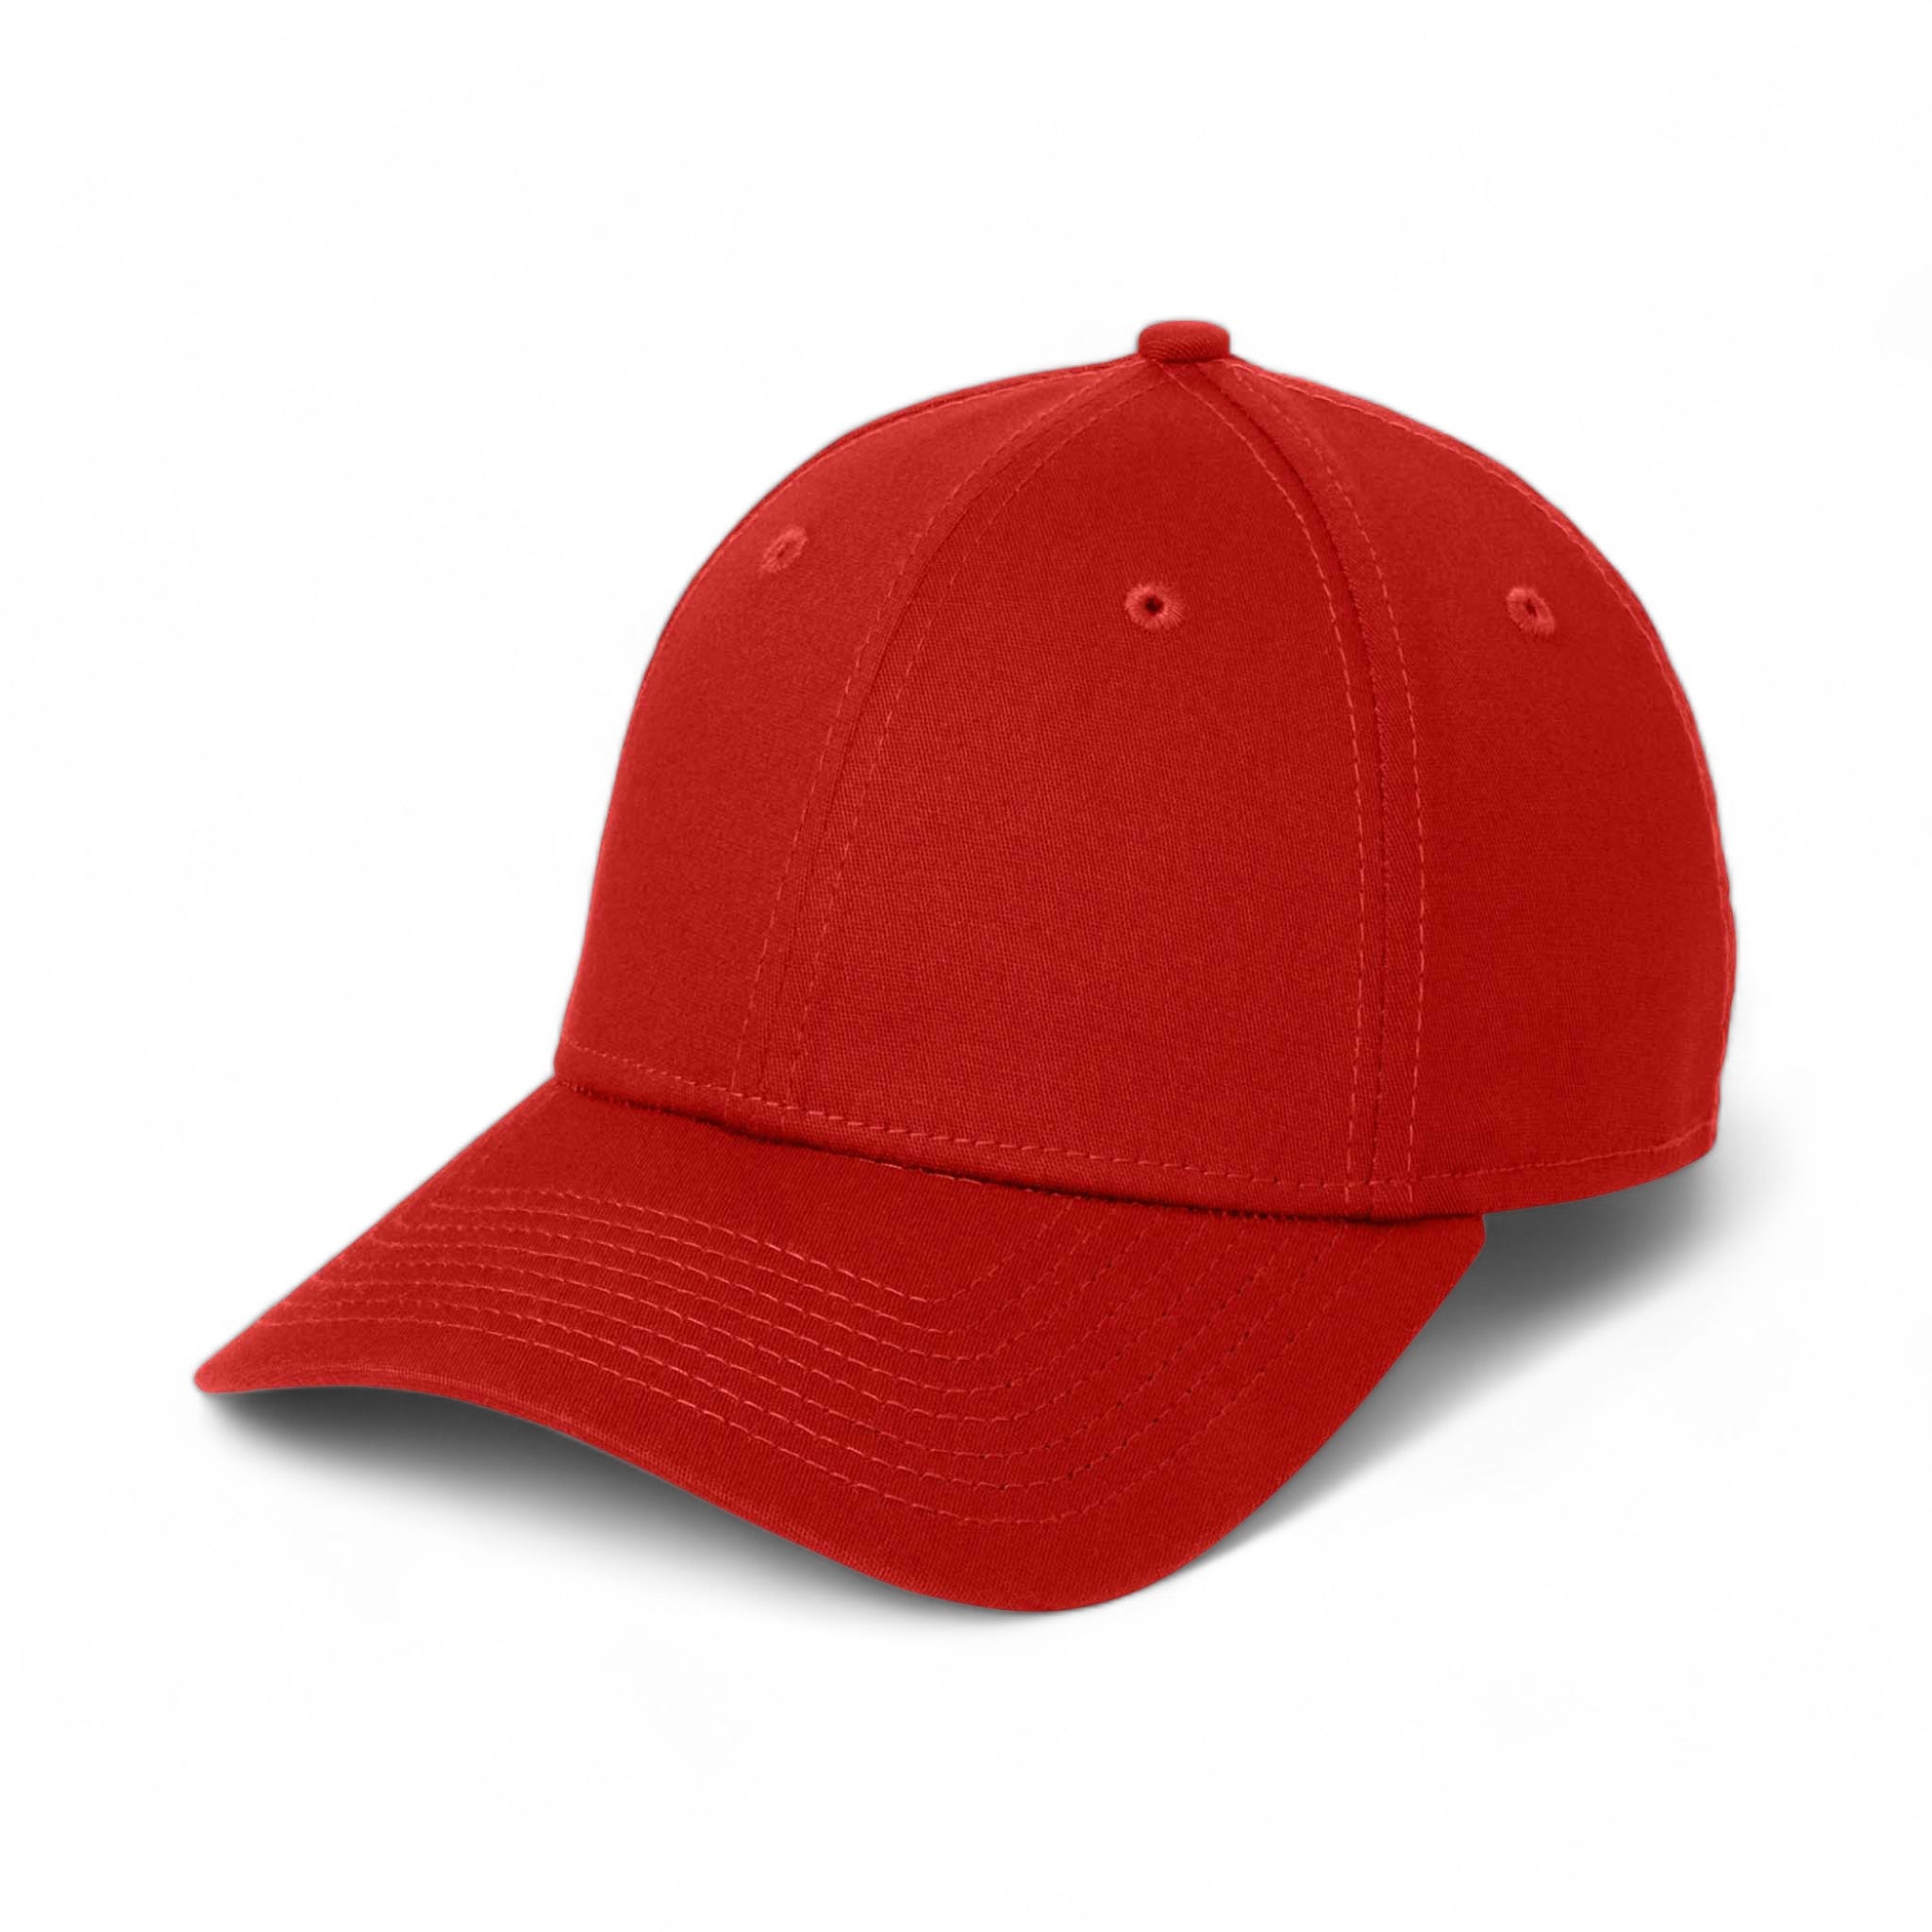 Side view of New Era NE1000 custom hat in scarlet red